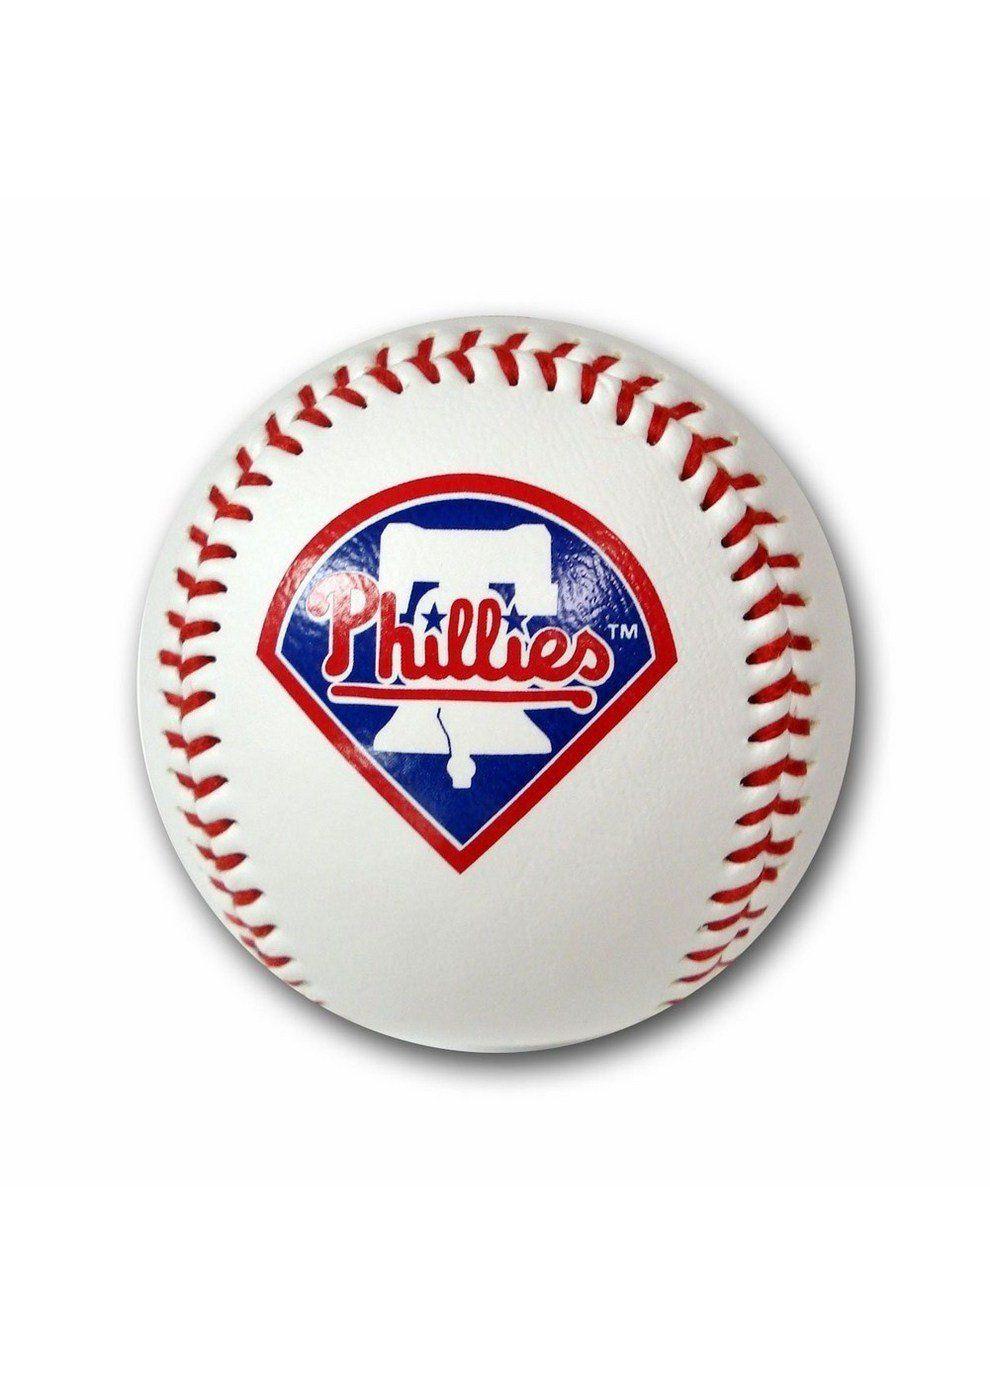 Phillies Baseball Logo - Amazon.com : MLB Philadelphia Phillies Baseball with Team Logo